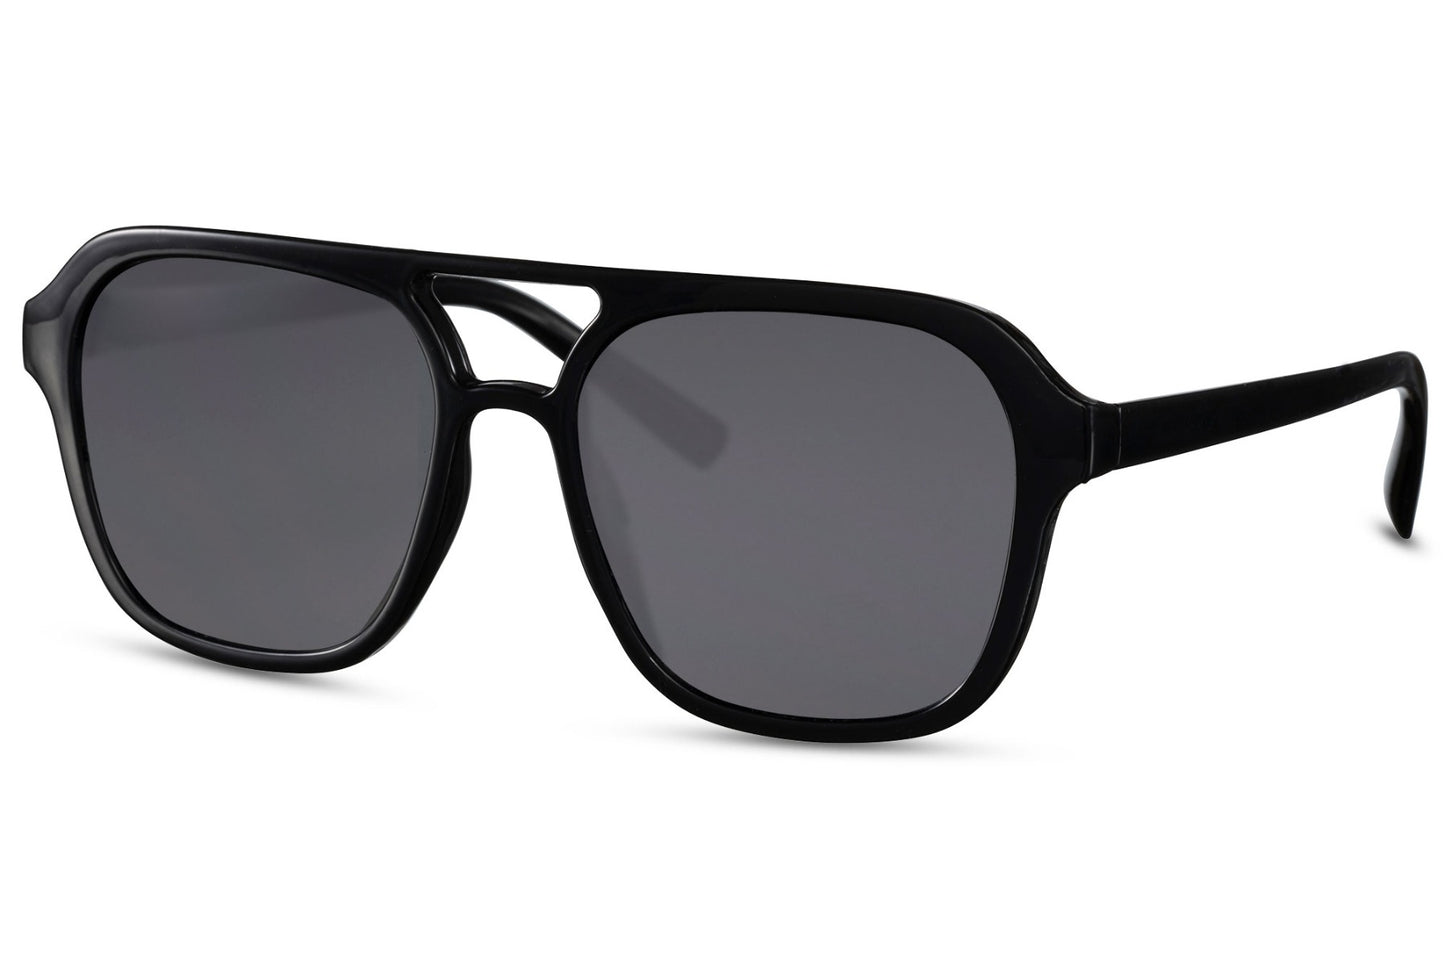 Stylish Black Retro Aviator Sunglasses